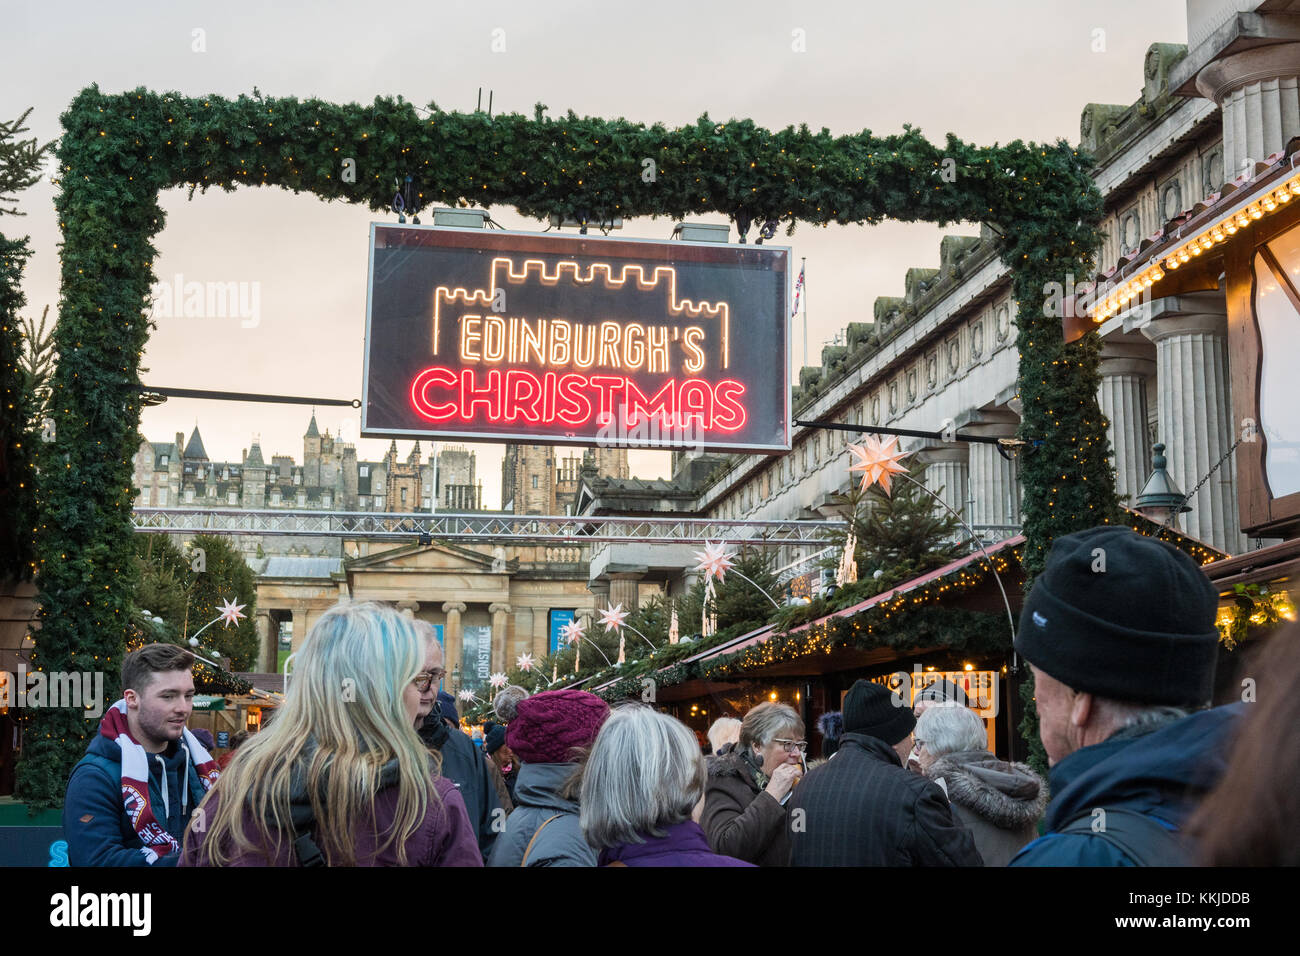 Edinburgh's Christmas 2017 - people entering the christmas market in Edinburgh, Scotland, UK Stock Photo